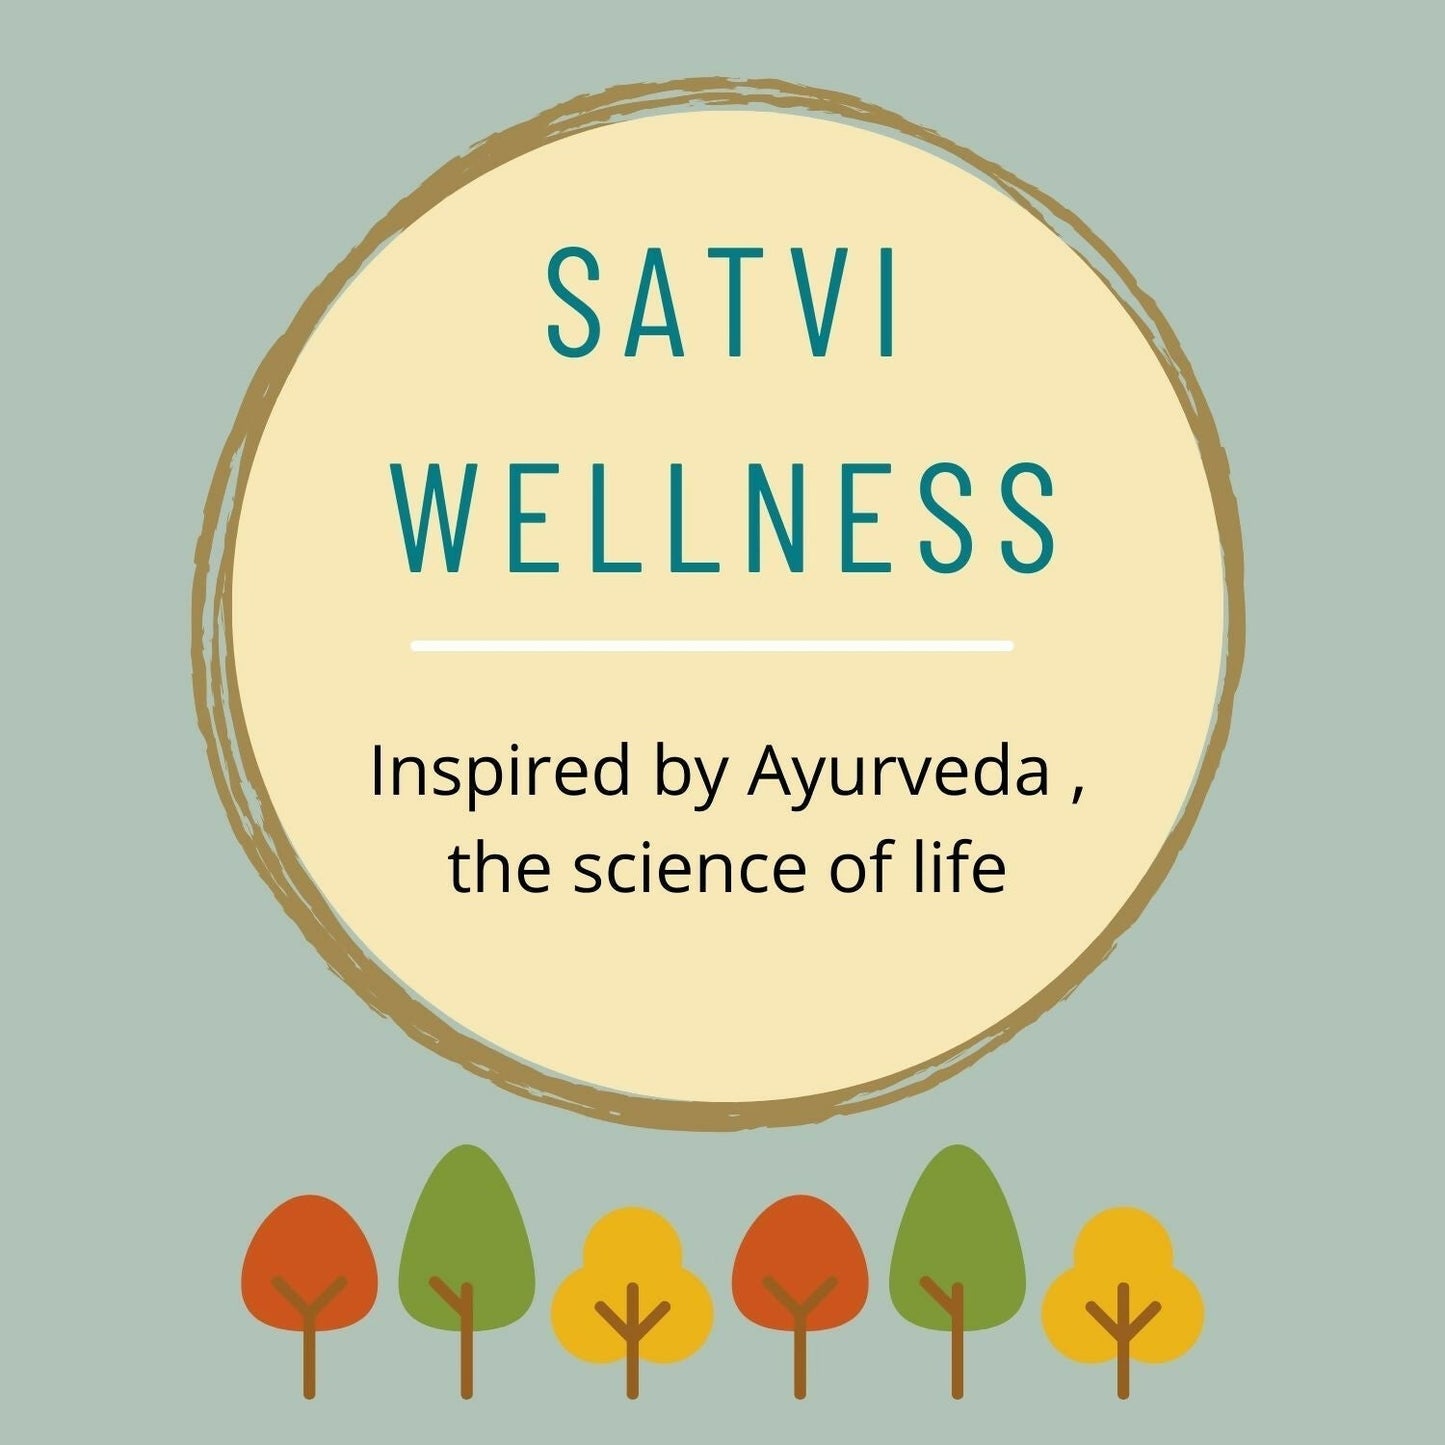 Satvi Wellness Navara Rice